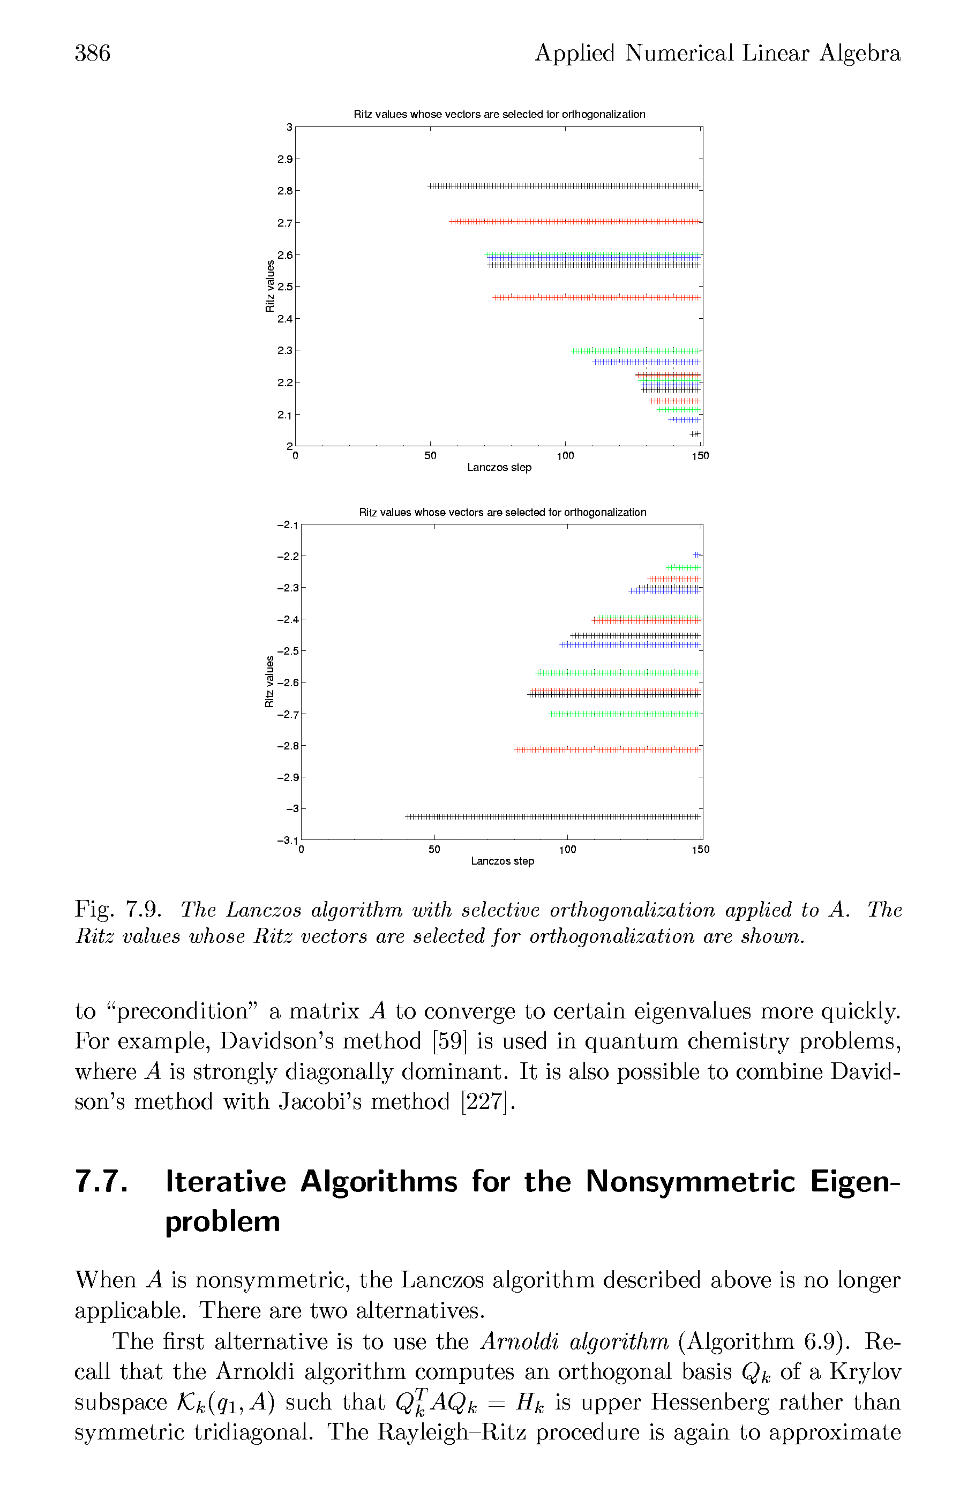 7.7 Iterative Algorithms for the Nonsymmetric Eigenproblem